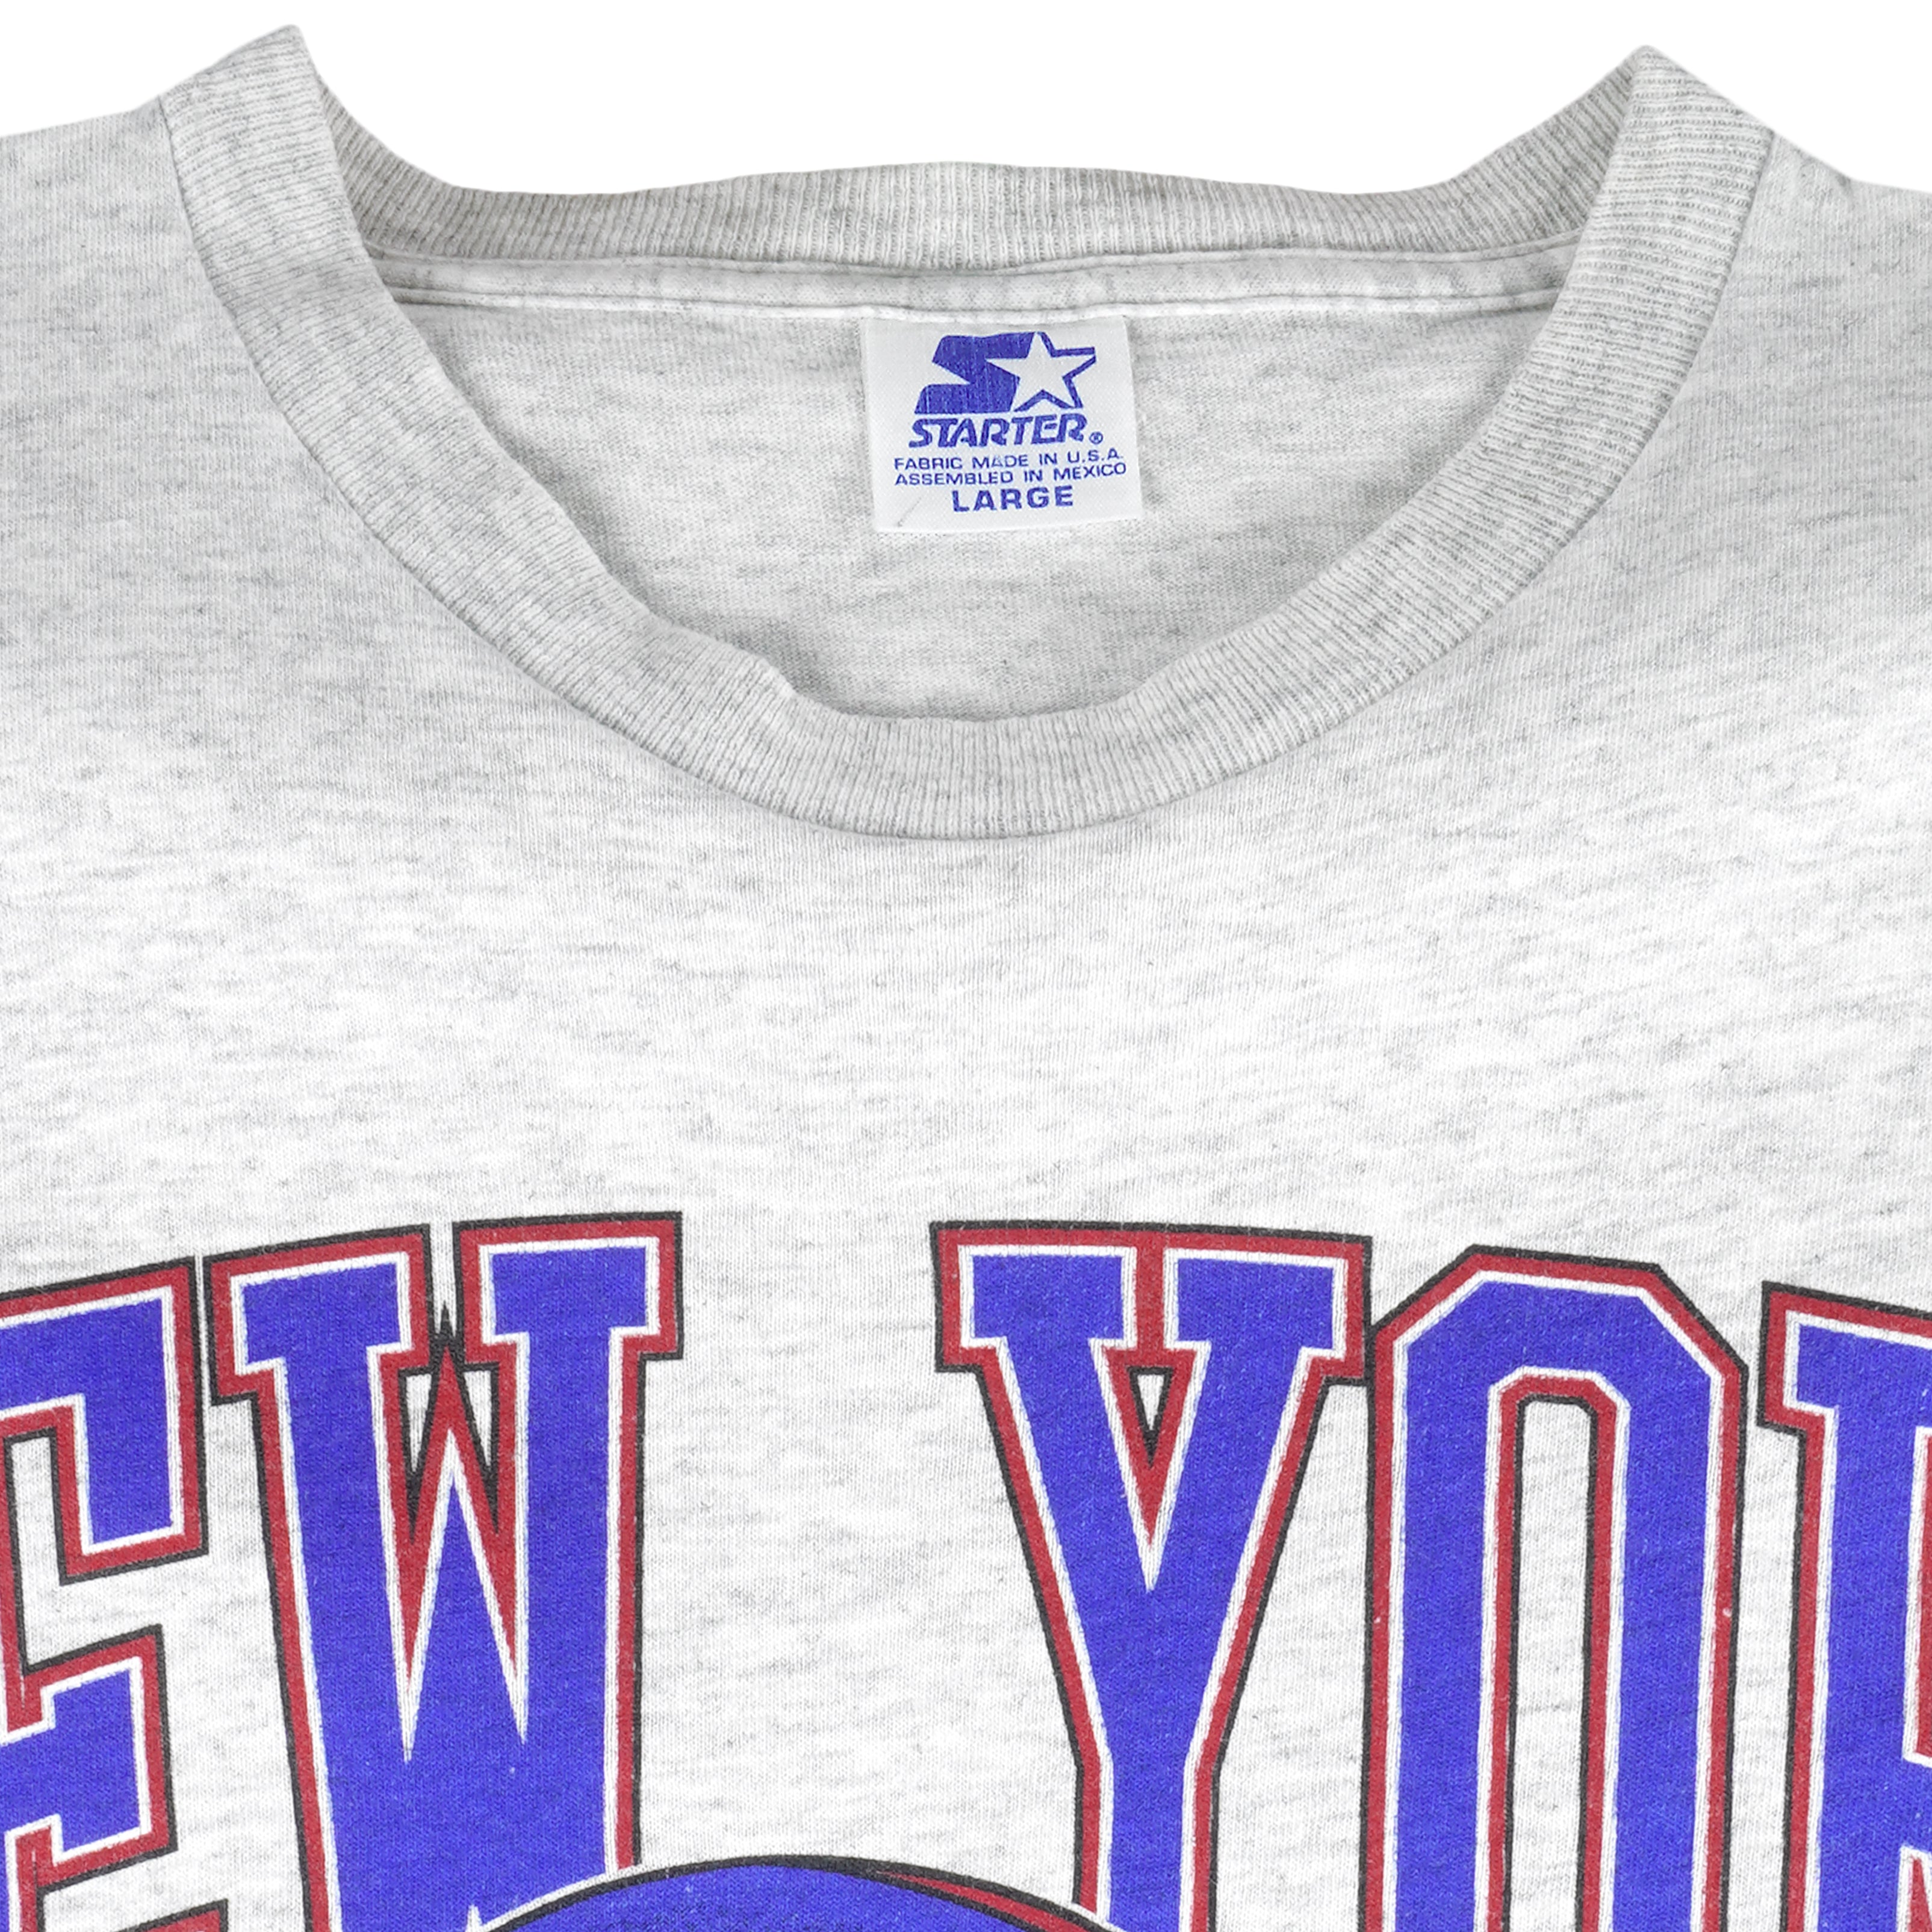 New York Giants Throwback Hockey Starter Jersey size X Large Nice!